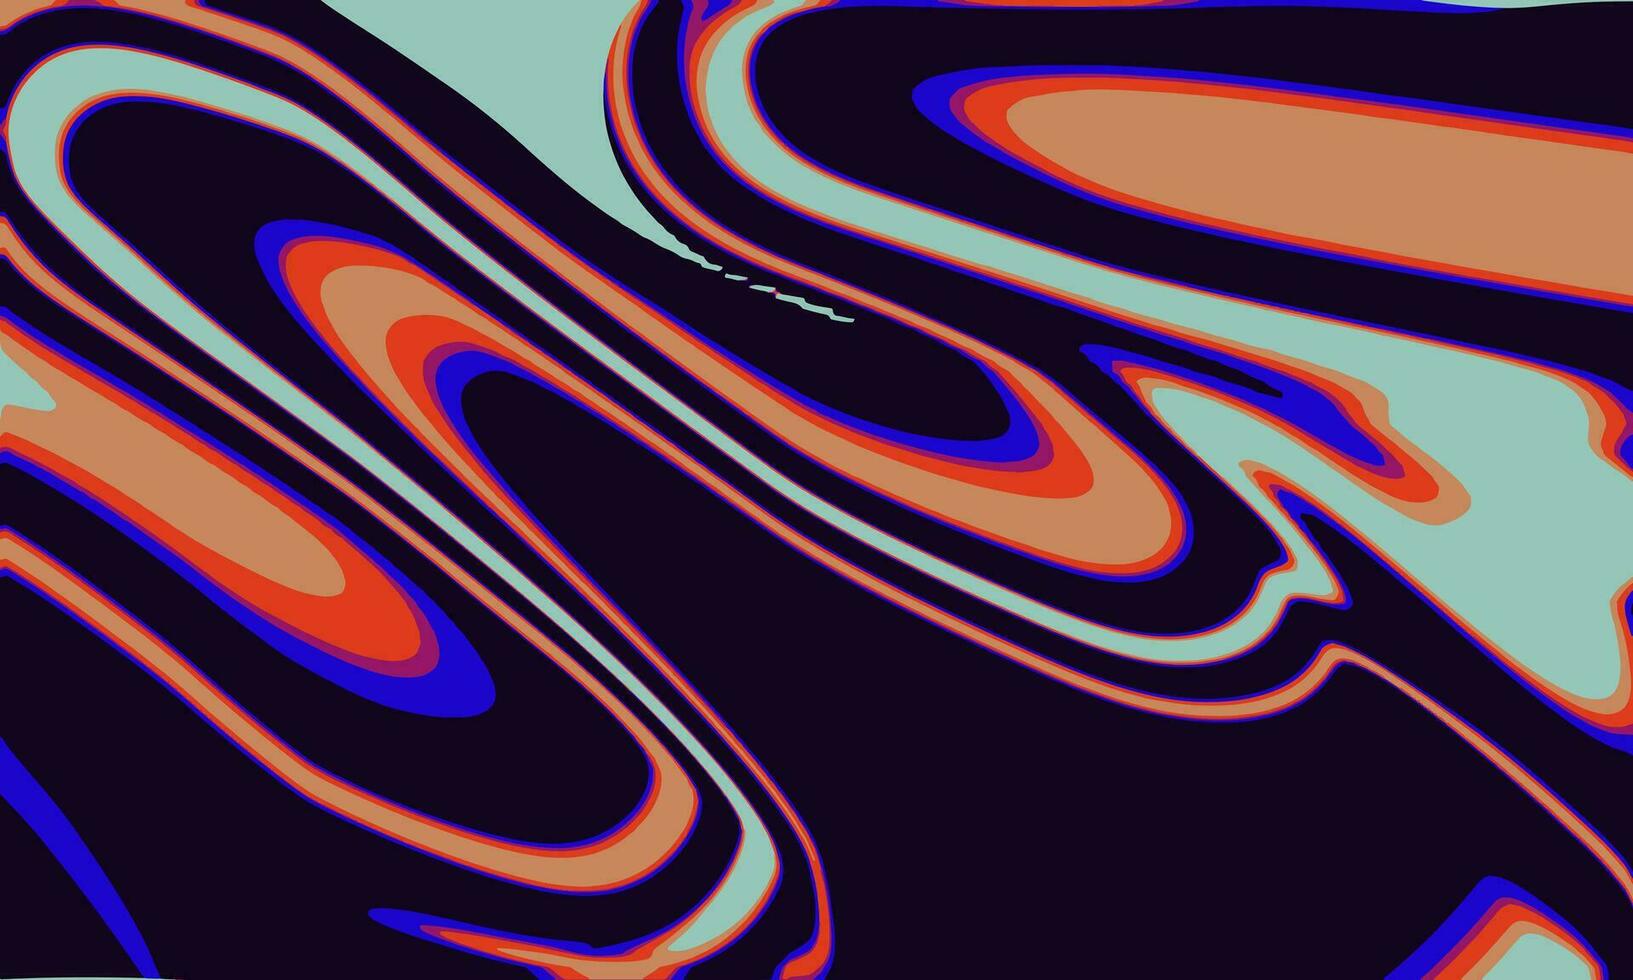 Abstract wavy background. Retrto vintage design. Vibrant holographic background. Vector illustration